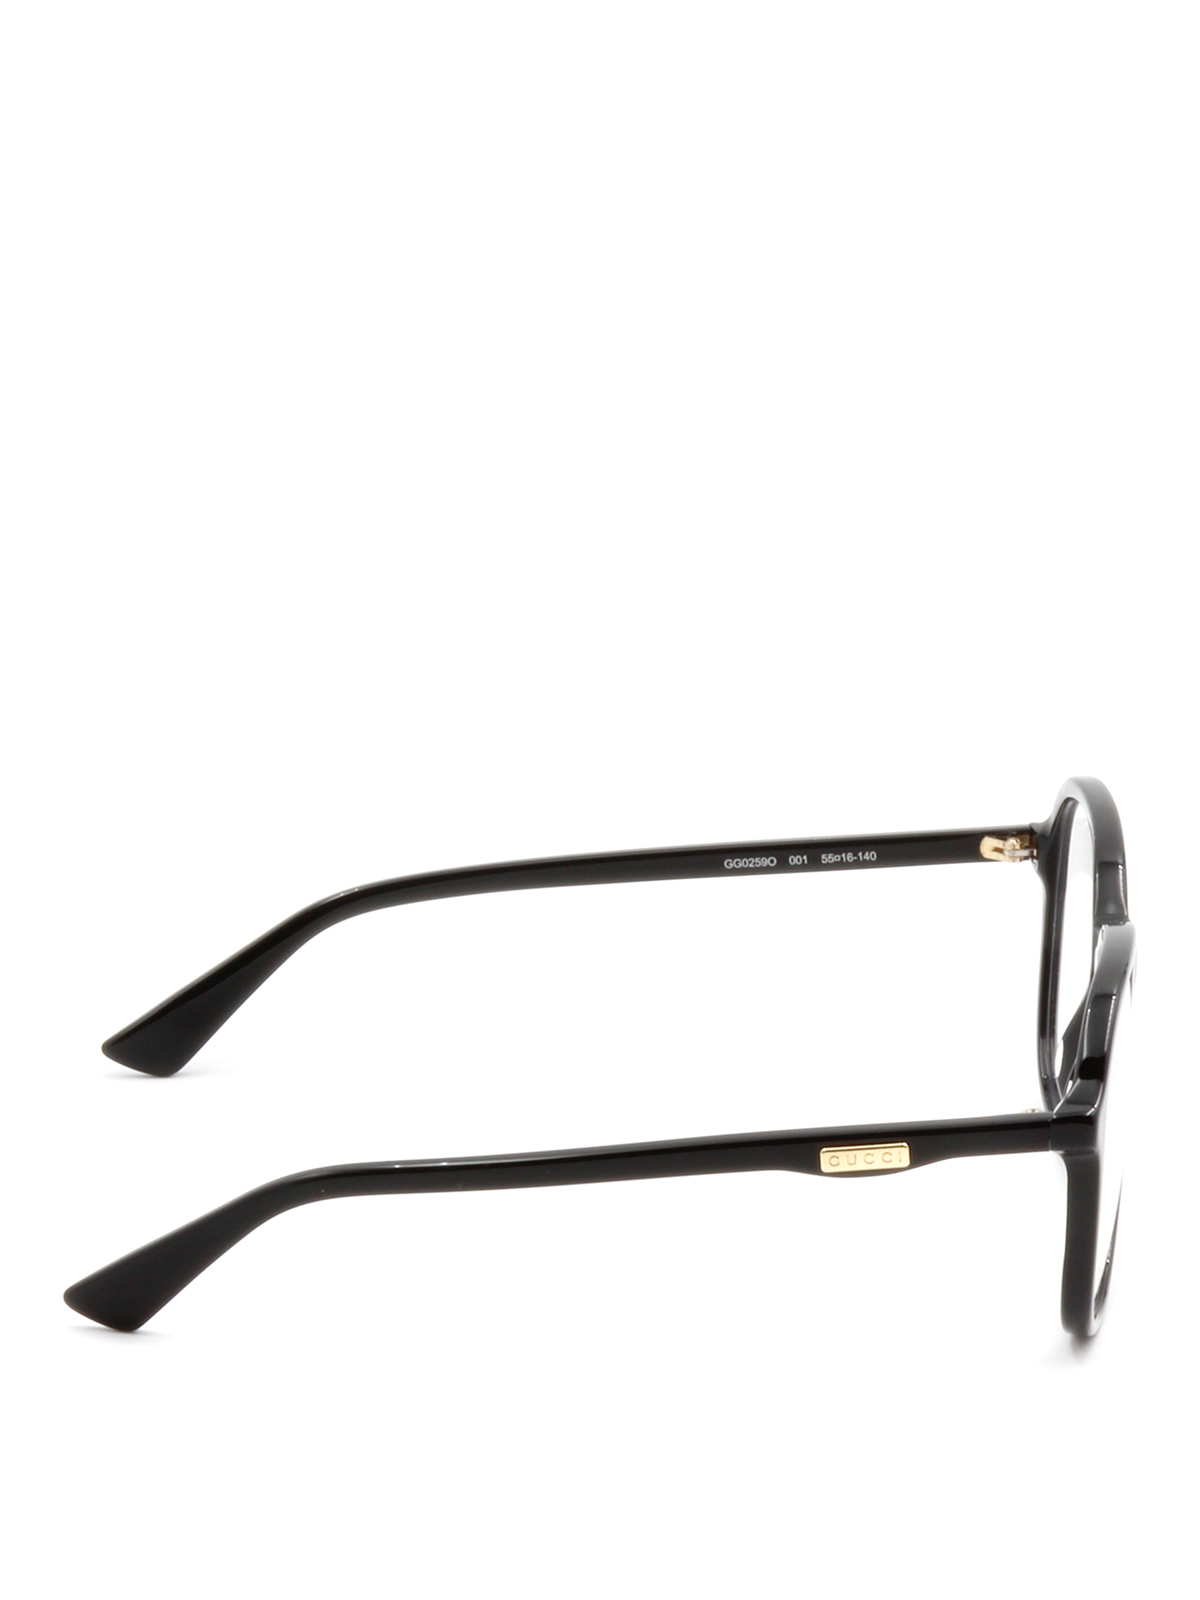 gucci black eyeglasses